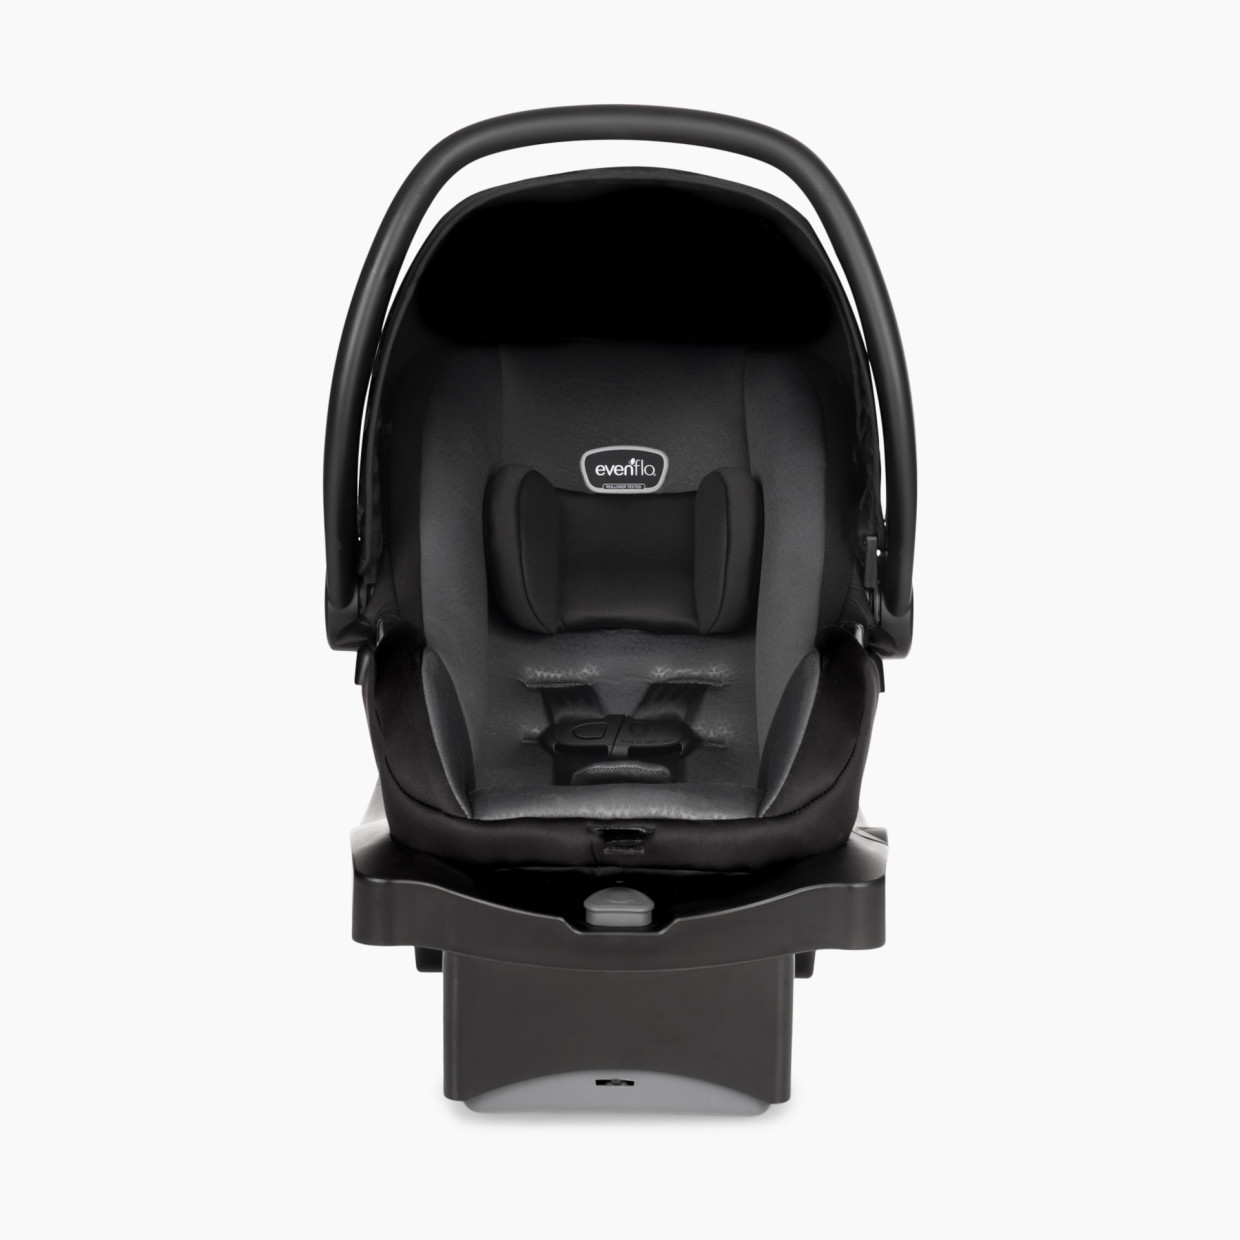 Evenflo Litemax 35 Infant Car Seat - Knowville Gray.